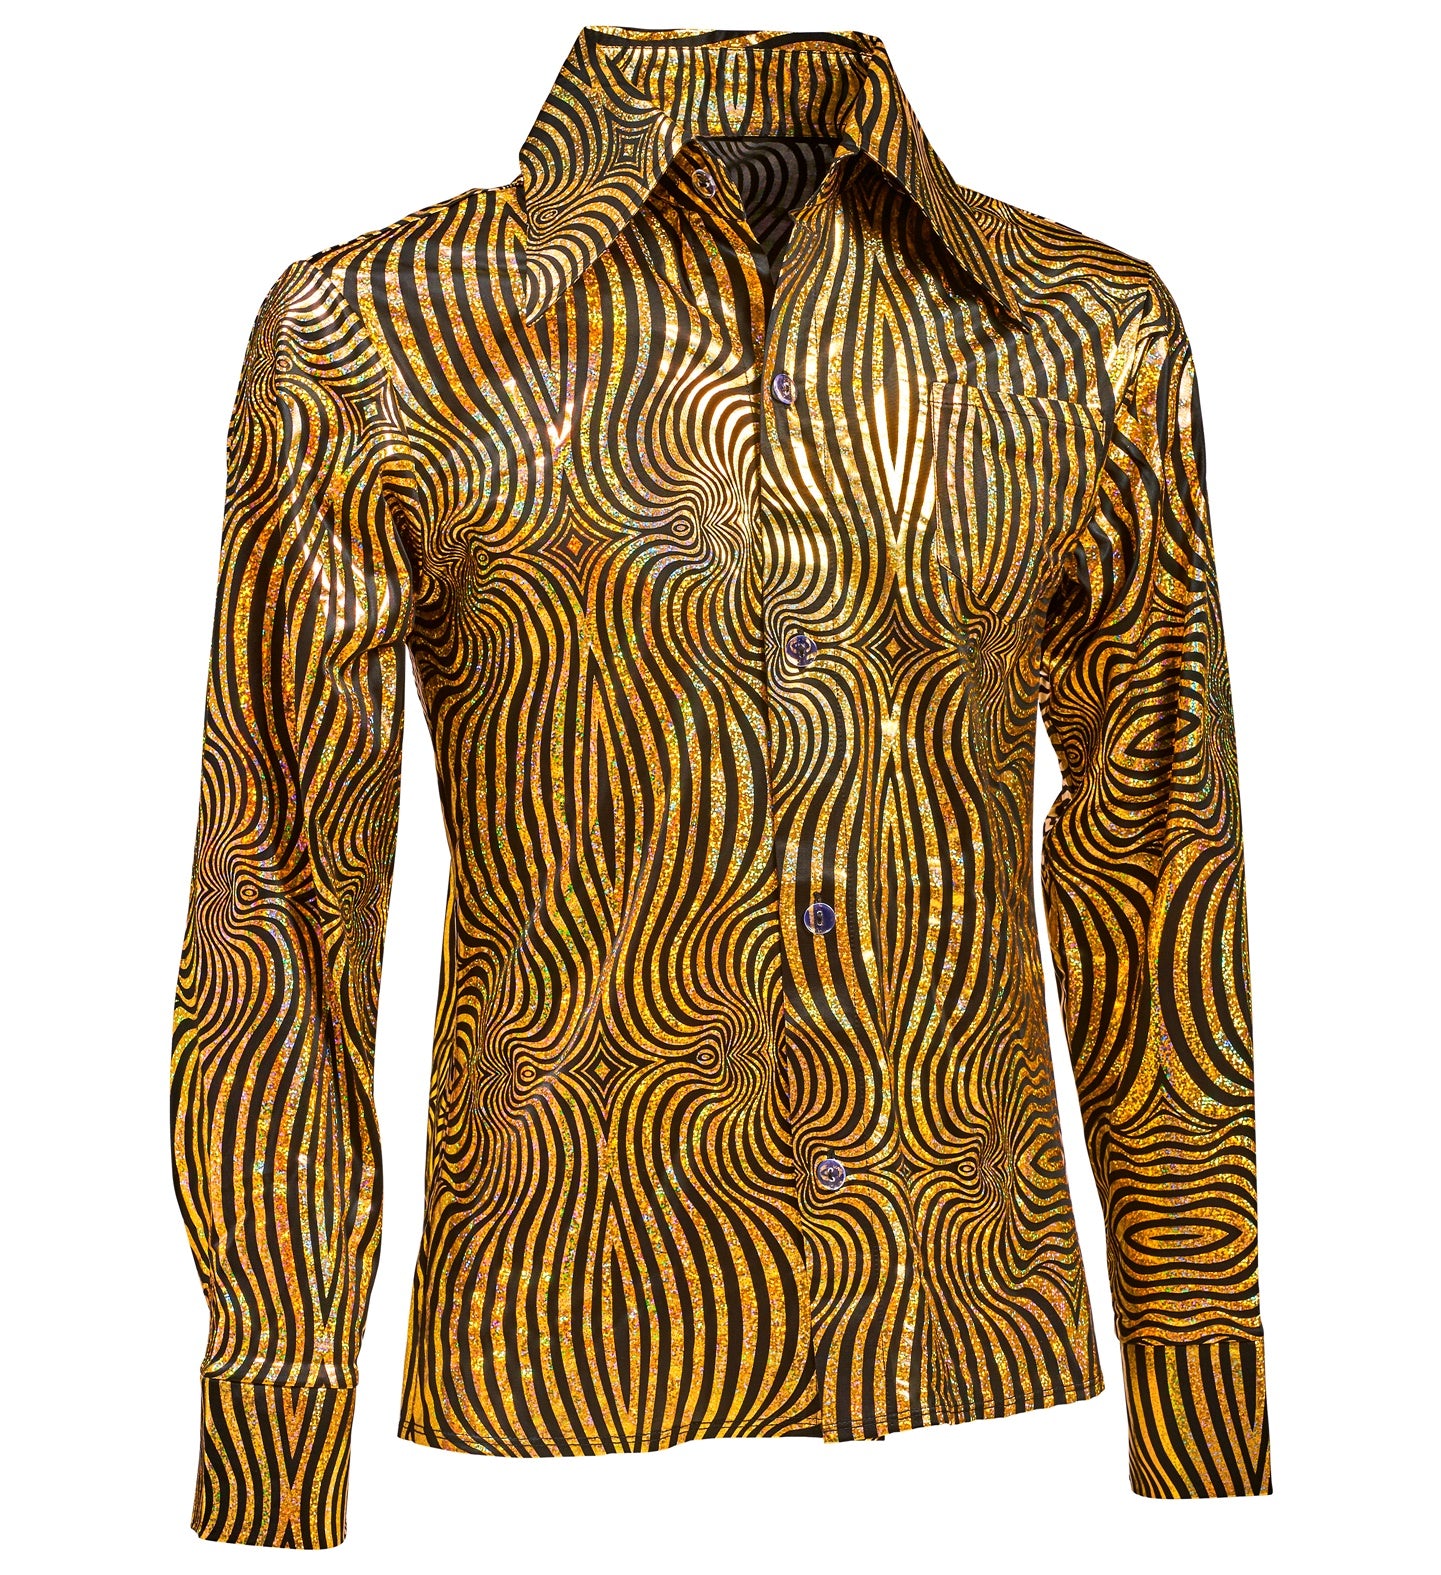 70's Groovy disco Shirt Gold & Black Men's costume